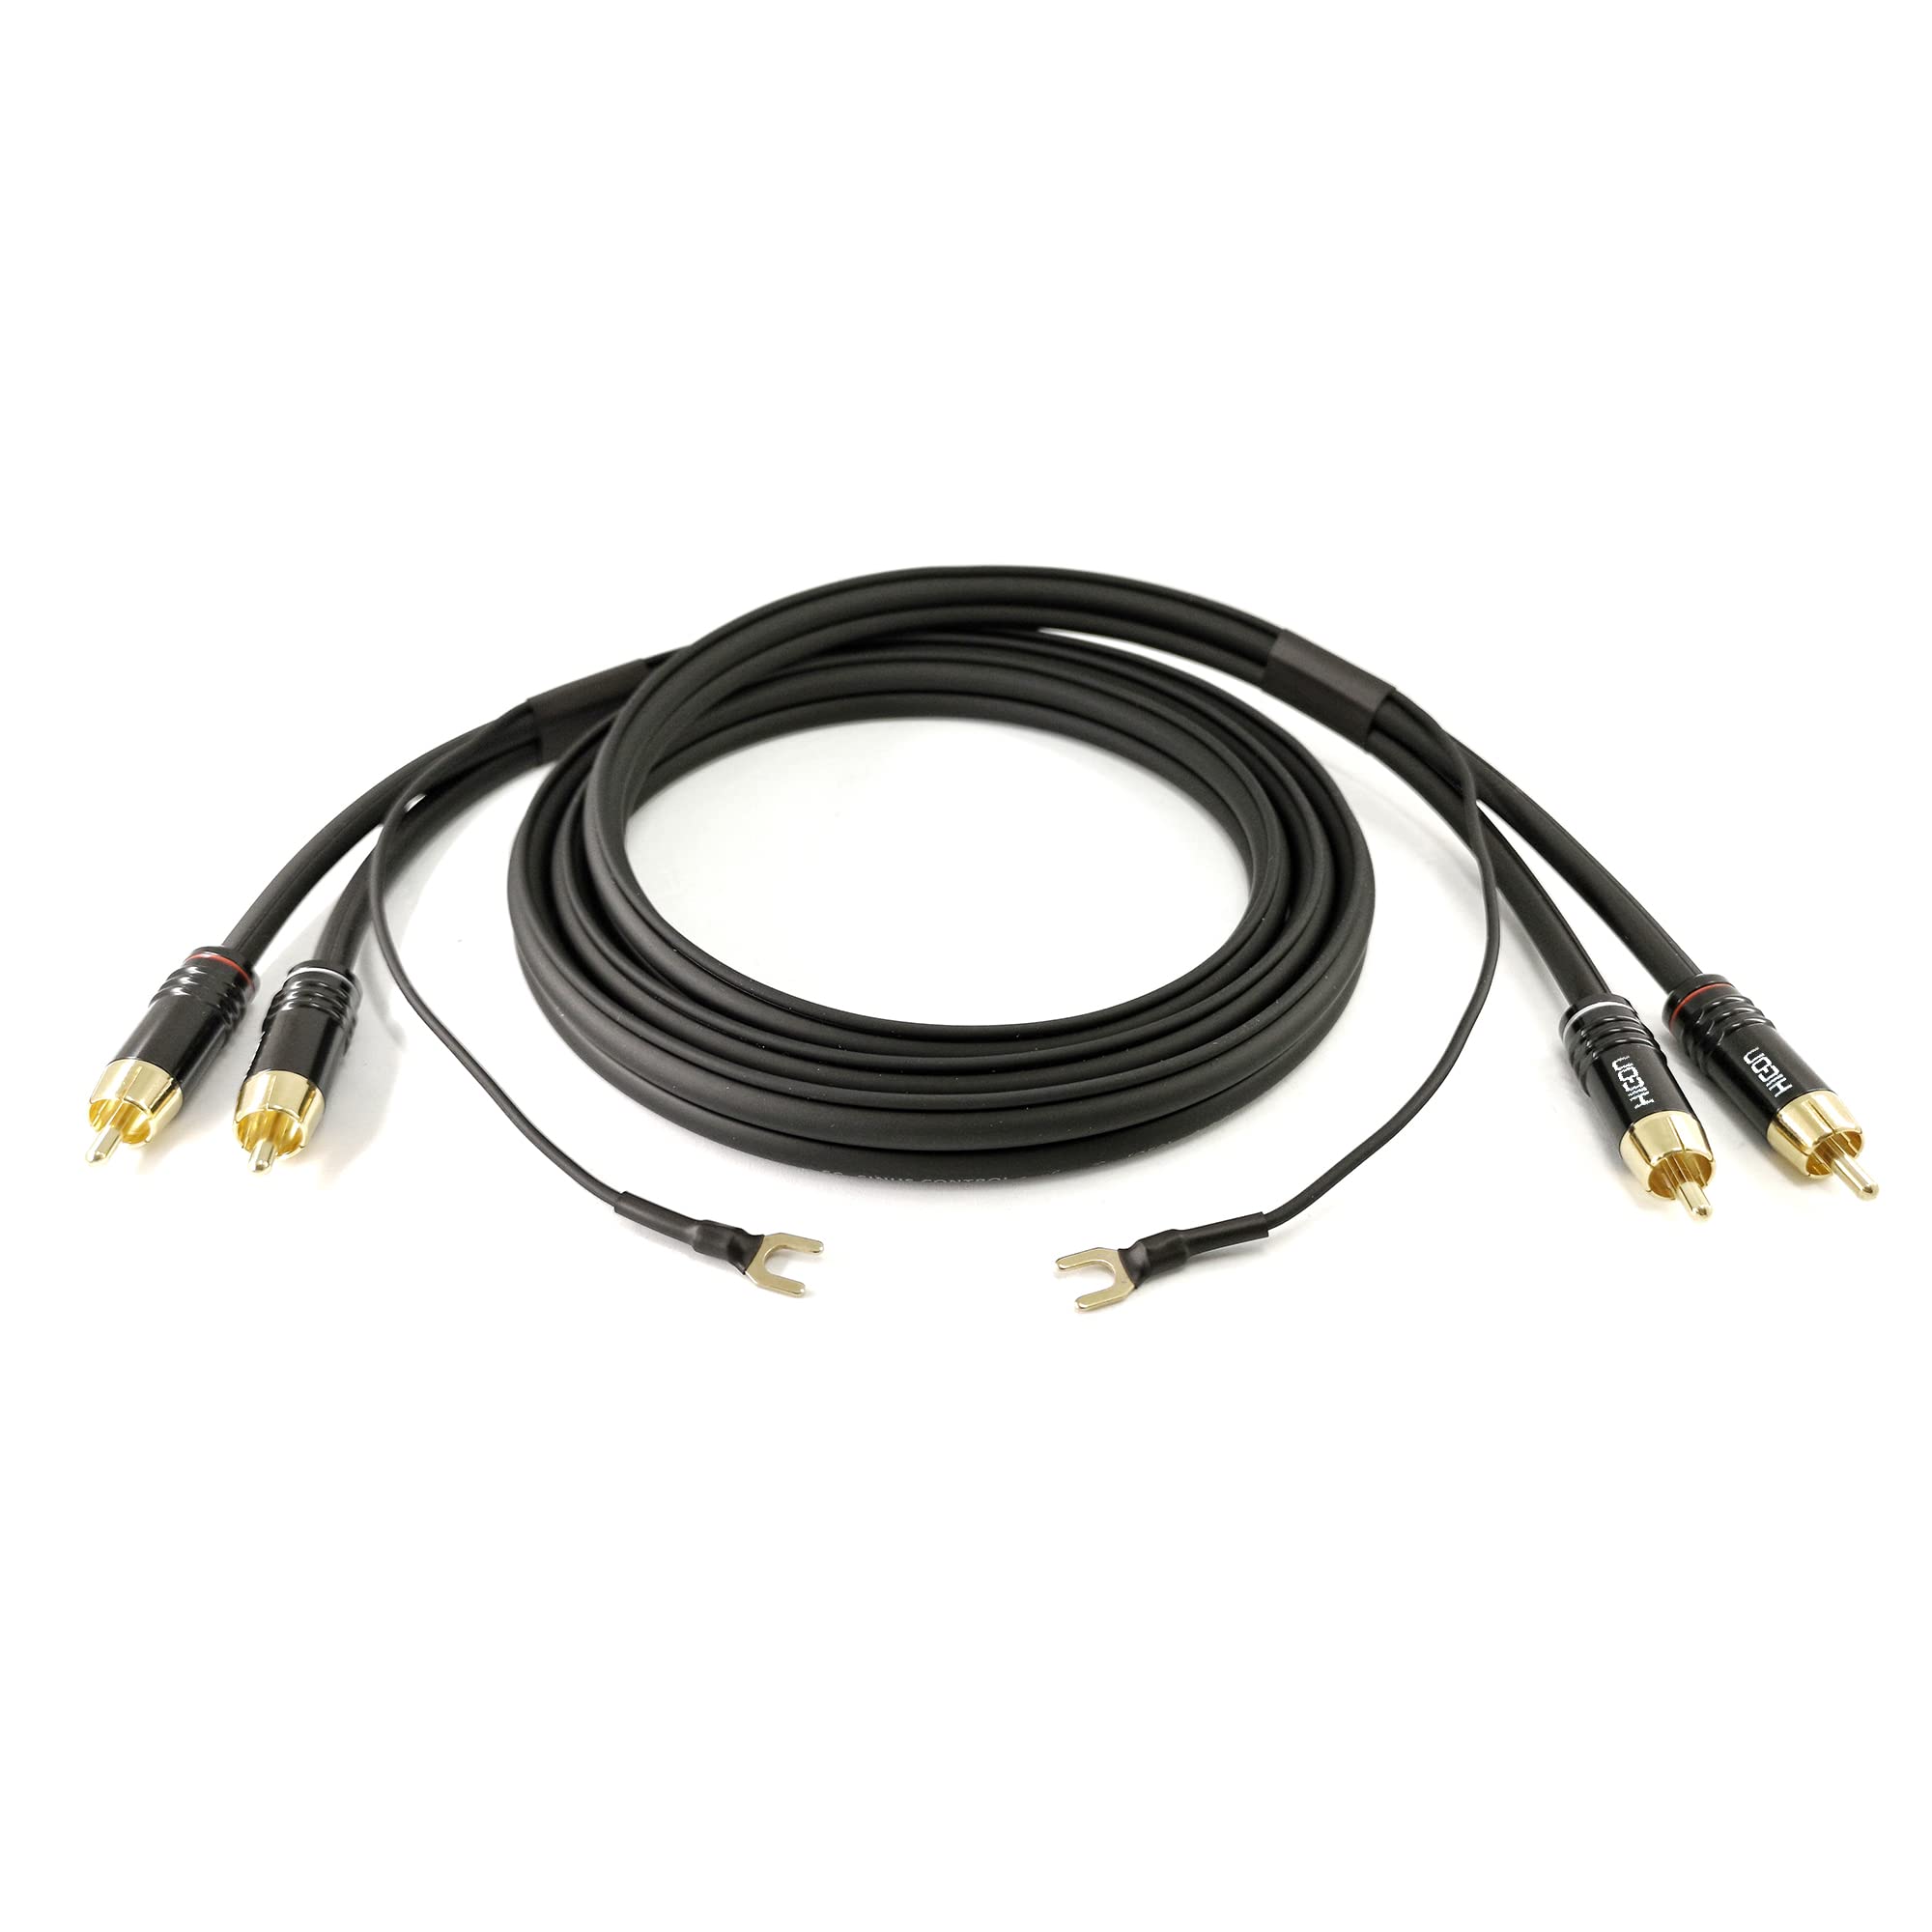 Selected Cable 75cm Phonokabel geschirmt mit extra langer Erdungskabel von 85cm für Plattenspieler 2 x 0,35mm² kurzes RCA Cinch Audiokabel vergoldete Stecker 0,75m - SC81-K3-BLK-0075